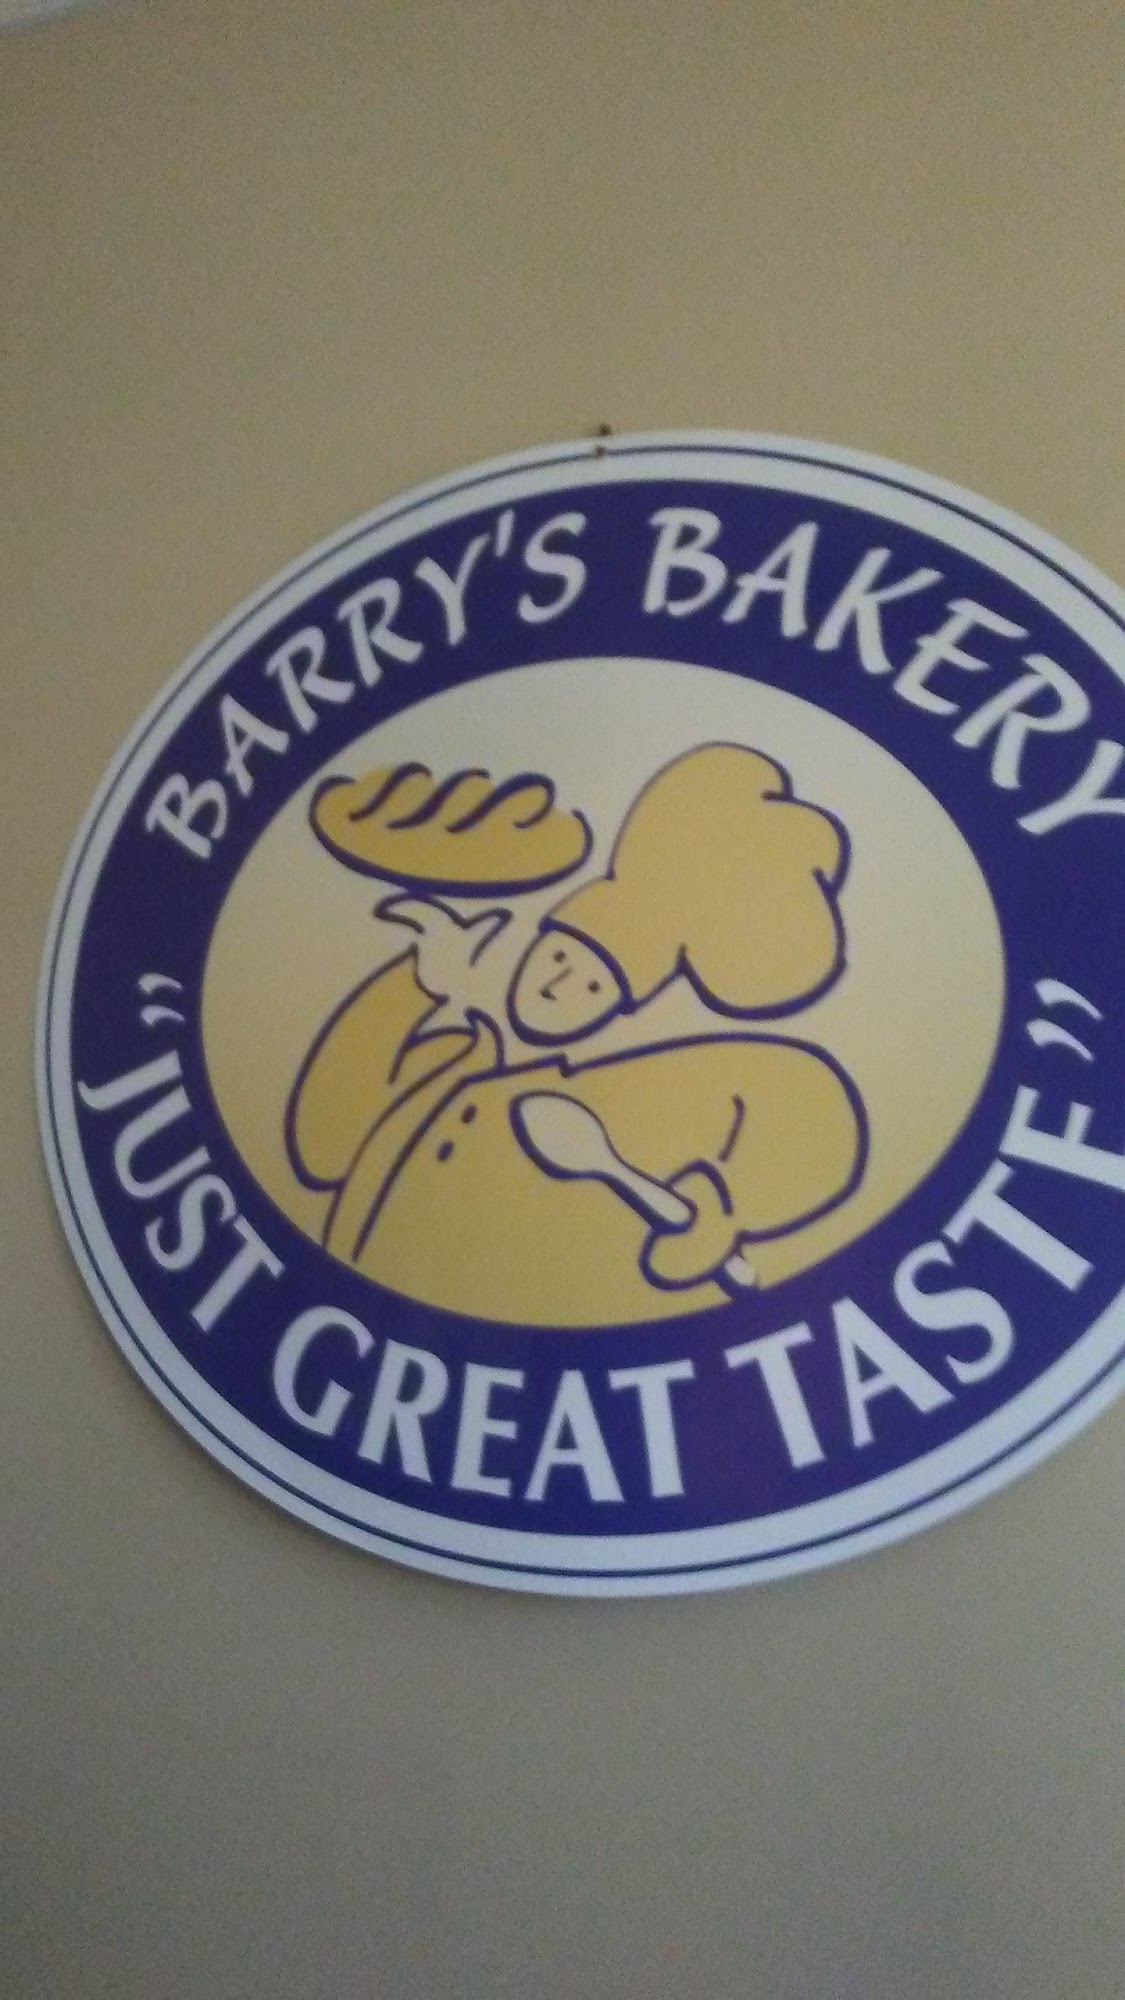 Barry's Bakery